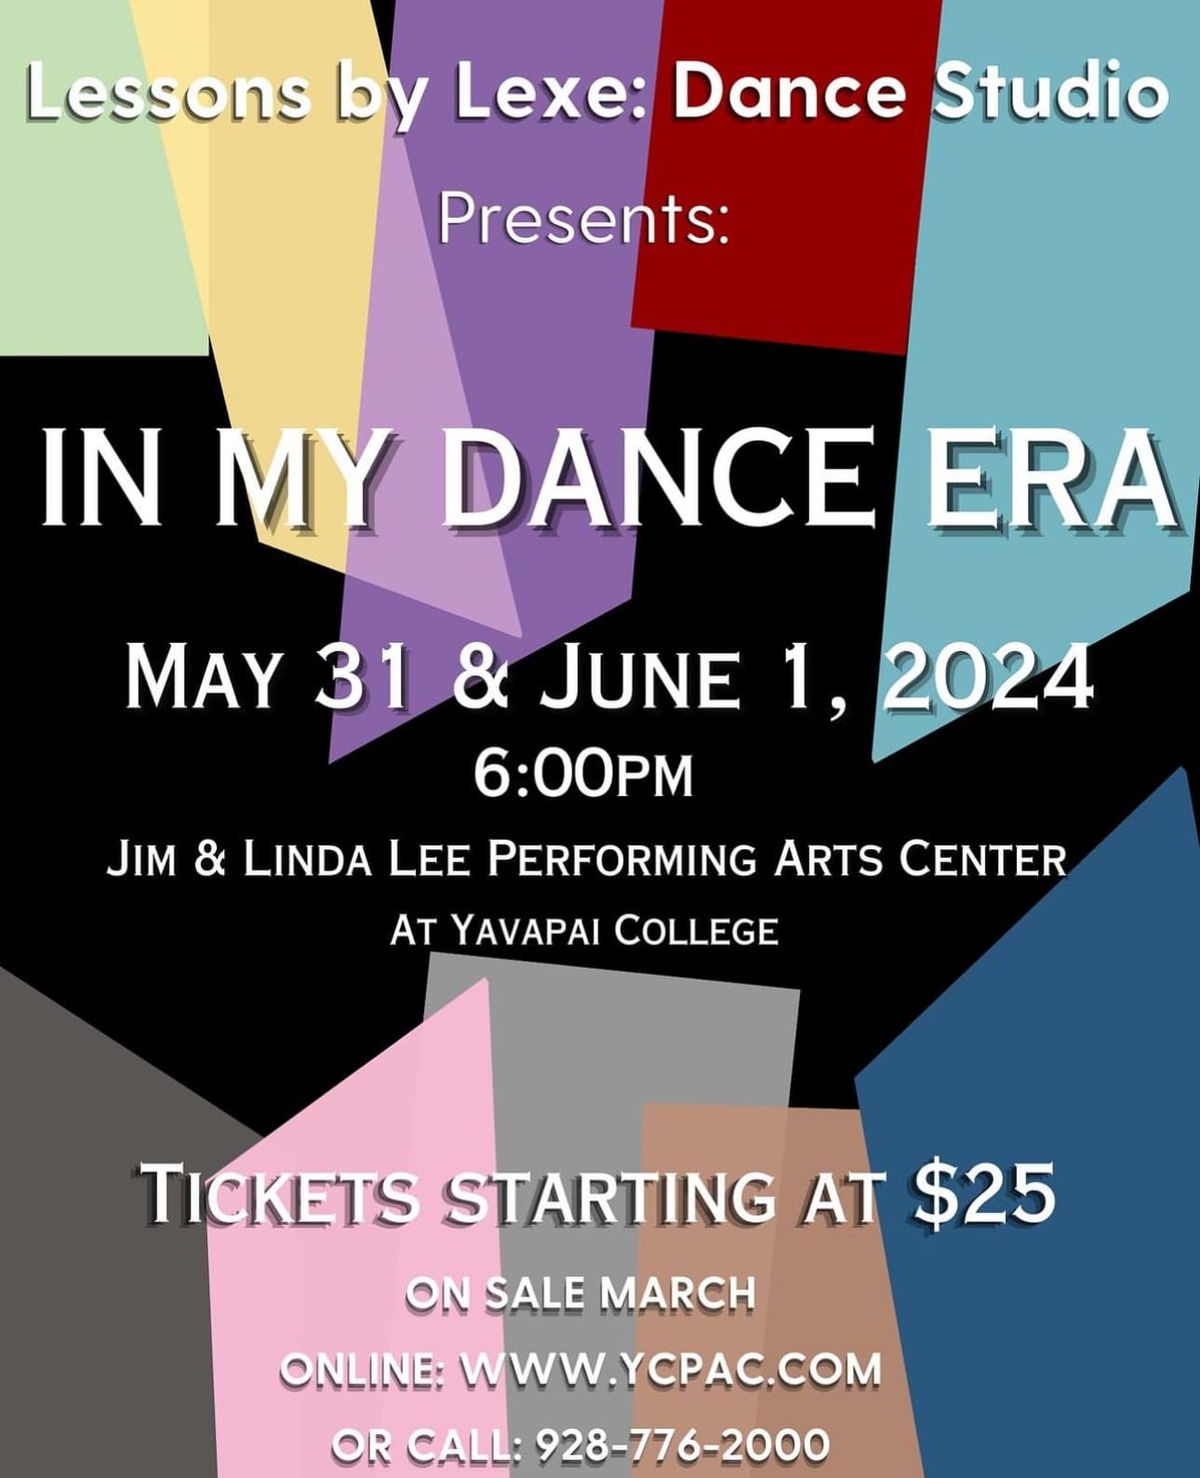 Dance Recital: "IN MY DANCE ERA" Lessons by Lexe: Dance Studio 